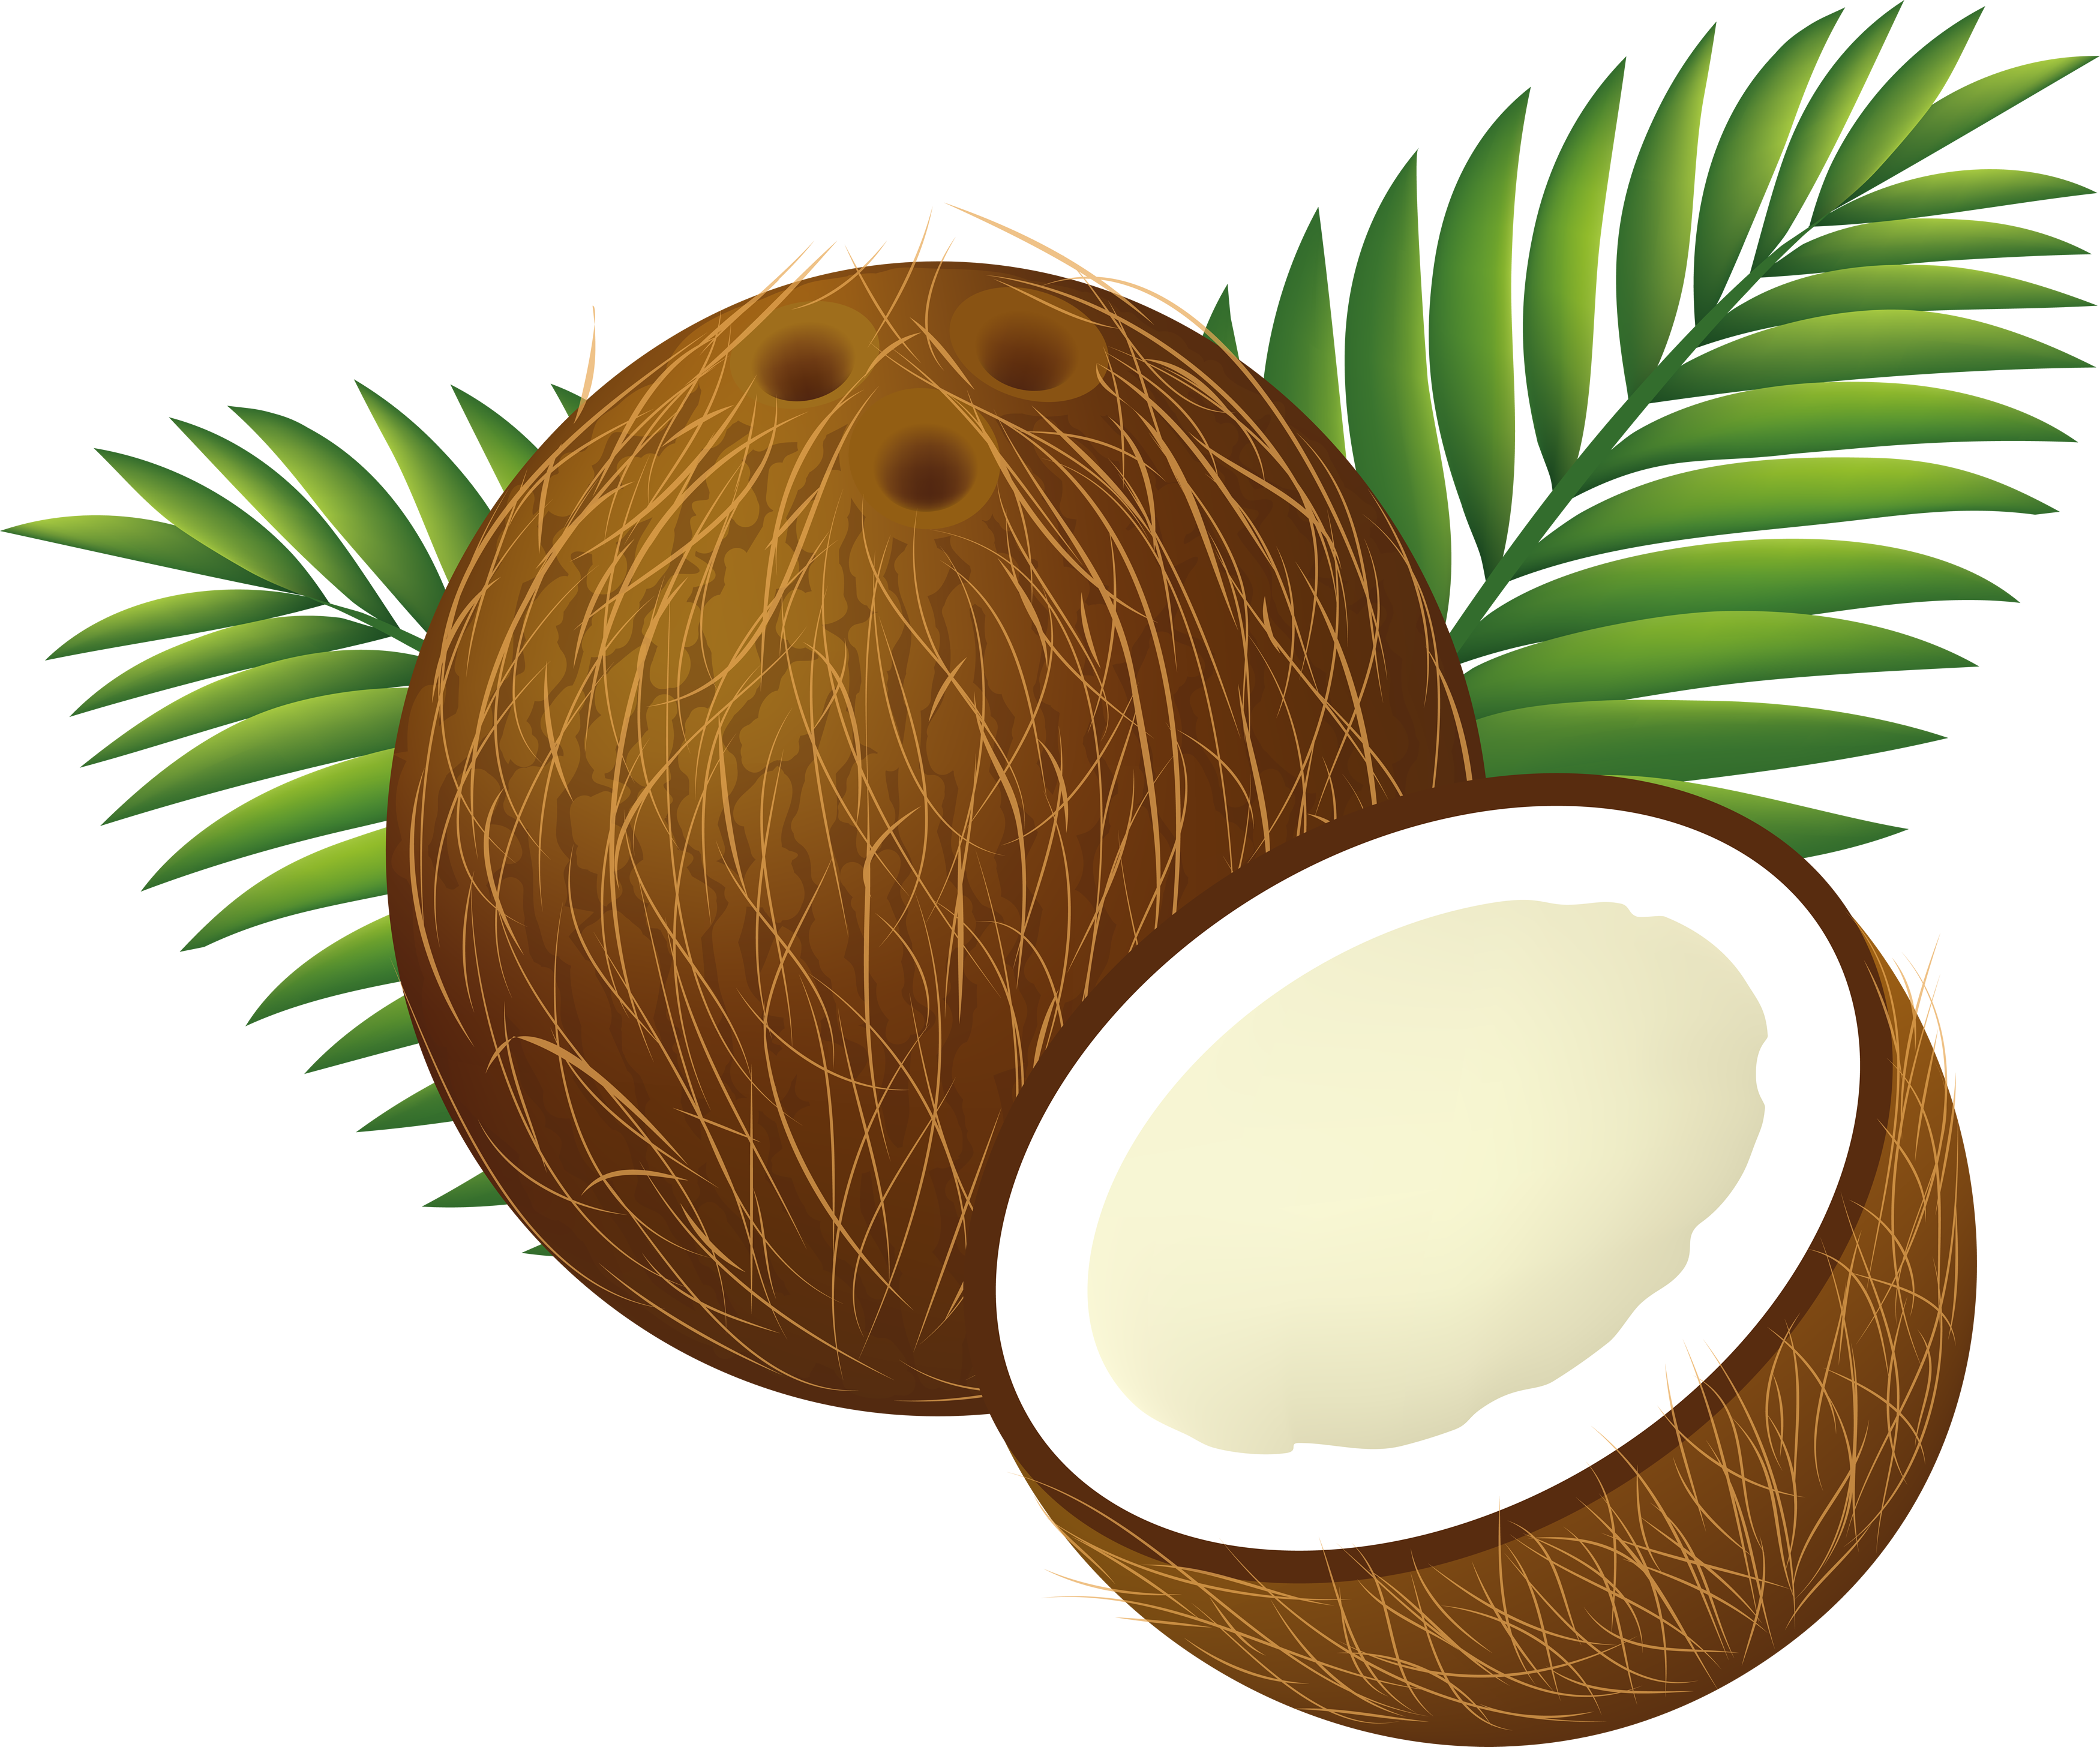 Coconut PNG-PlusPNG.com-1249